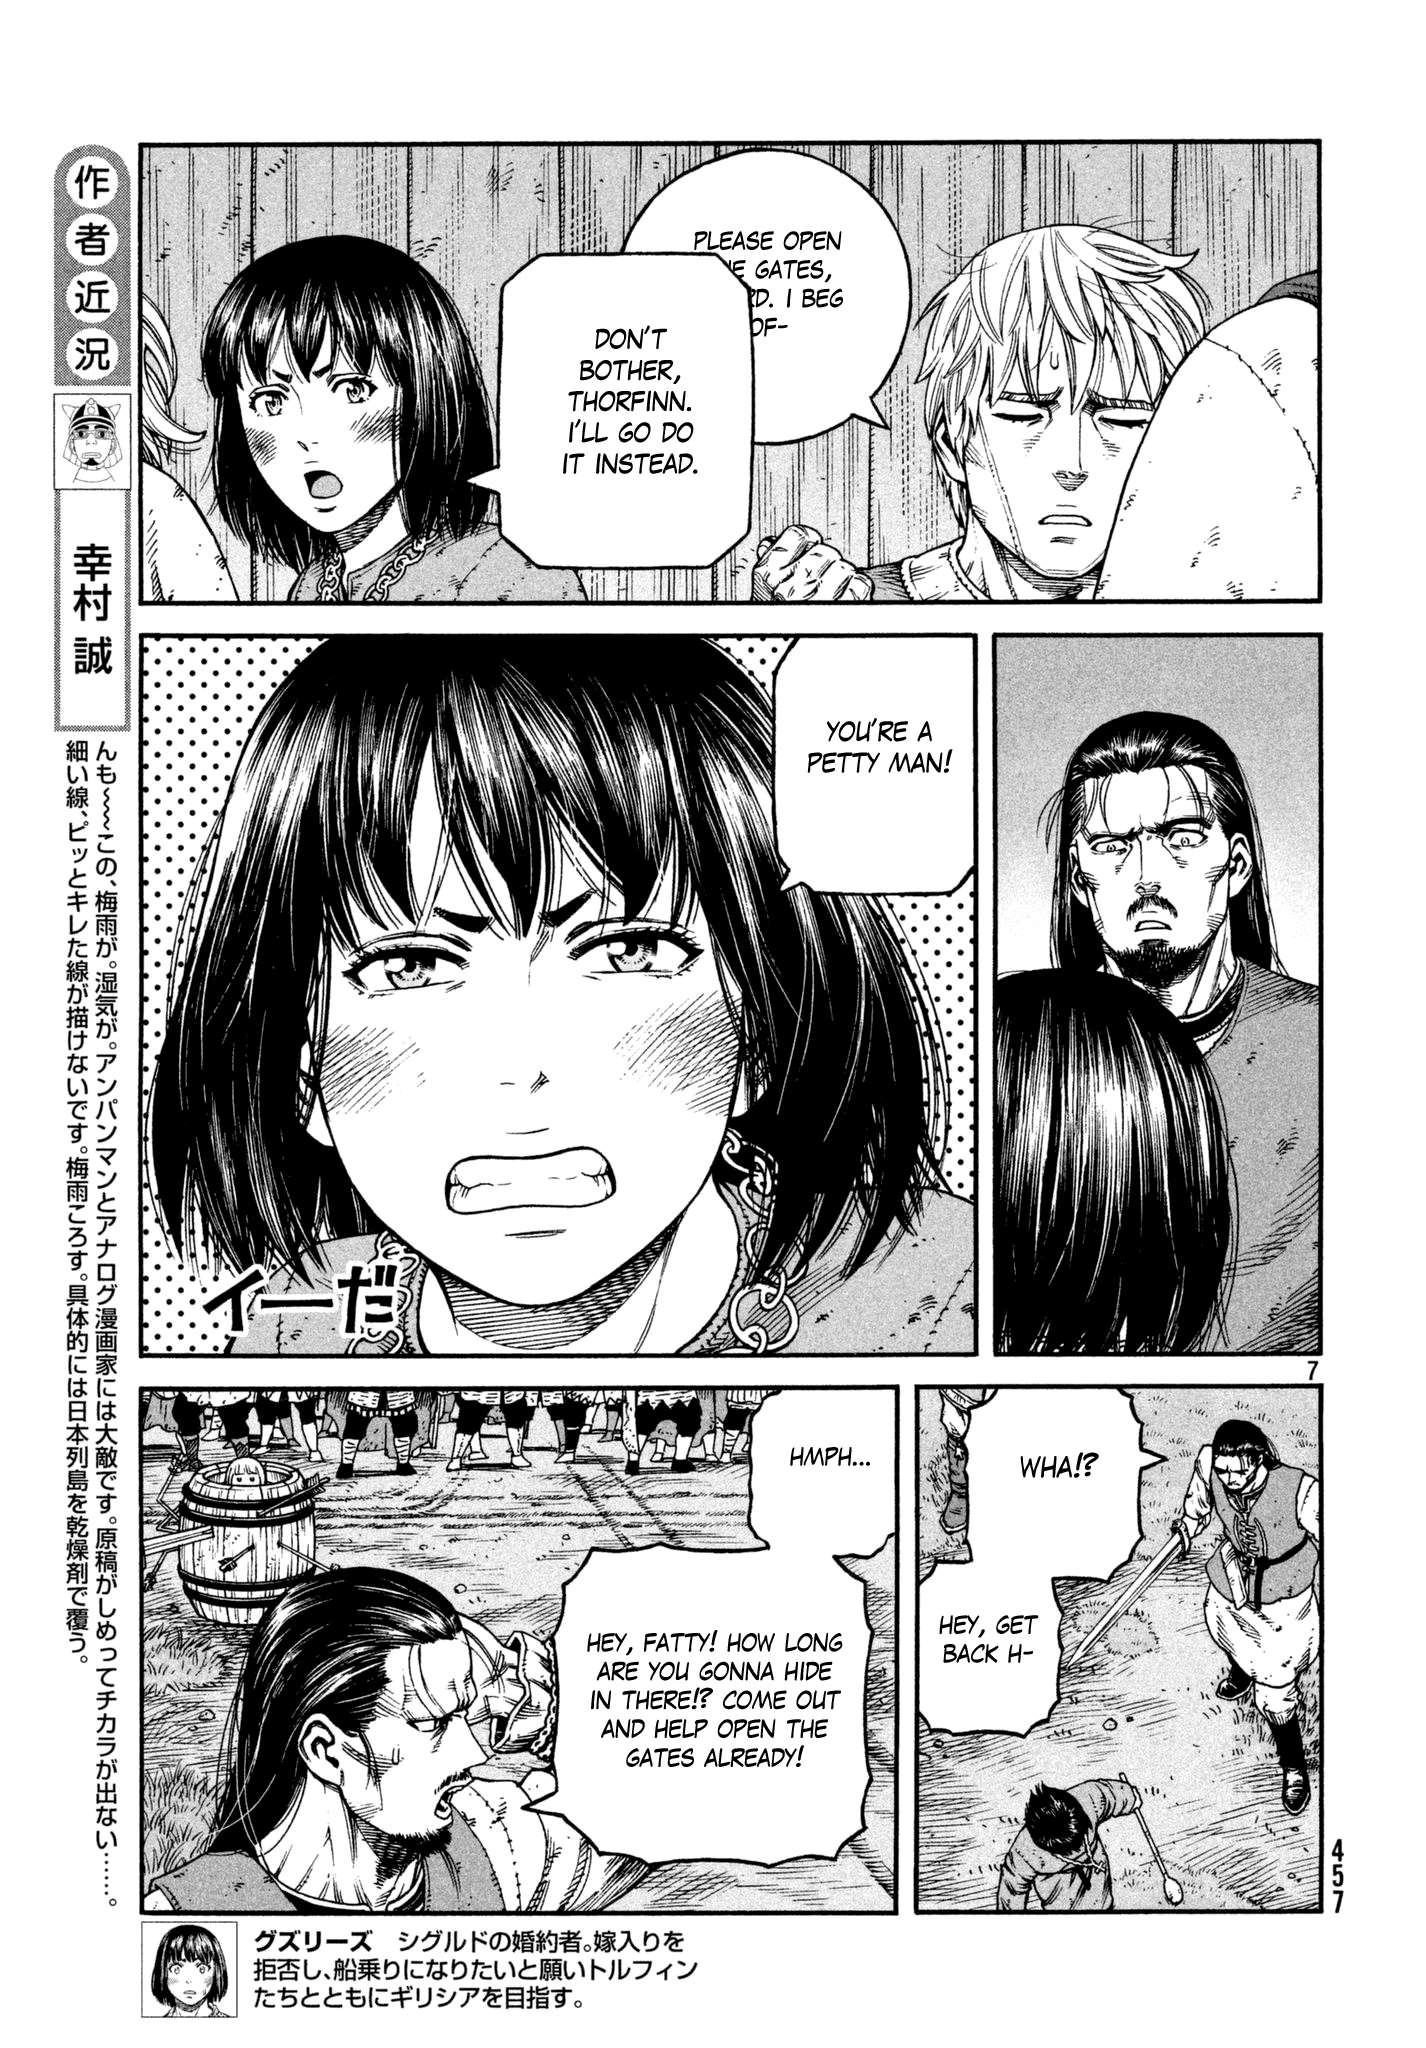 Vinland Saga Manga Manga Chapter - 151 - image 7